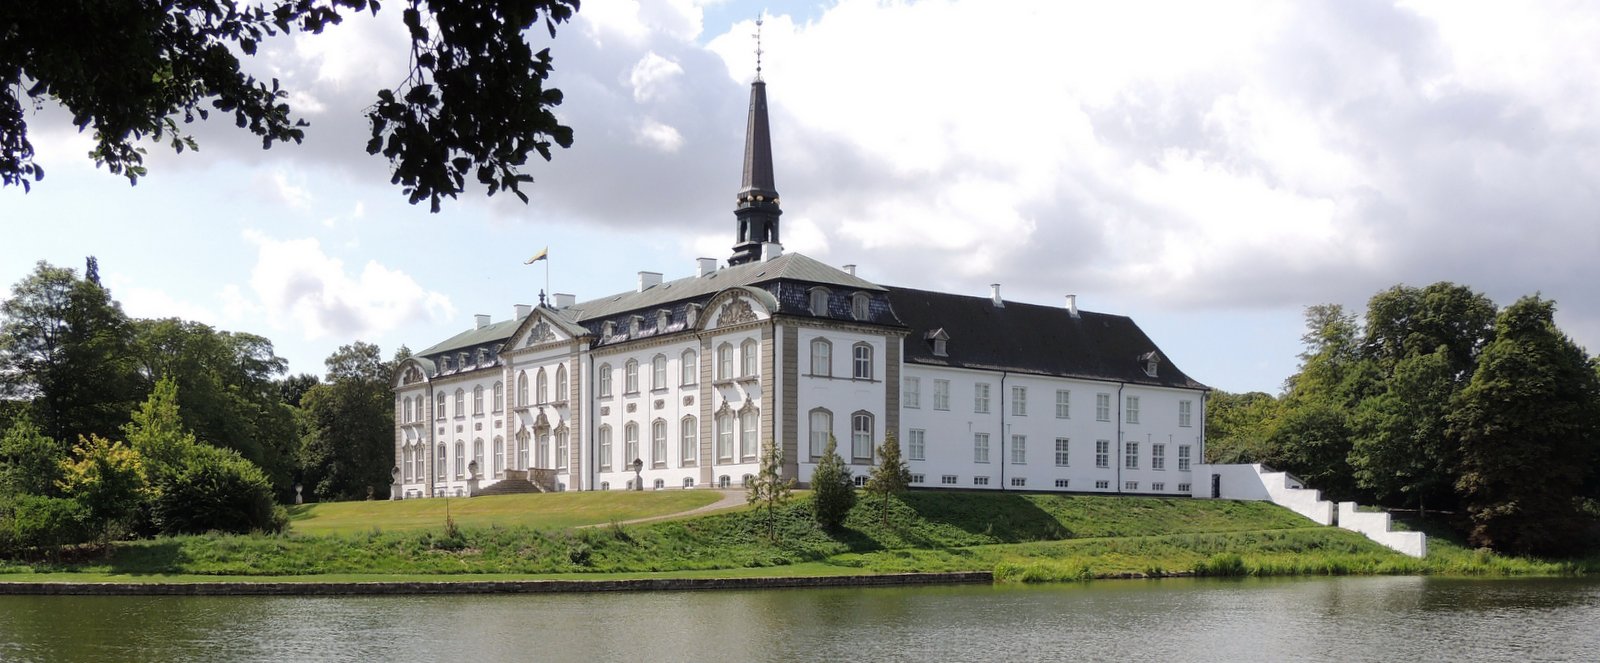 Schloss Bregentved